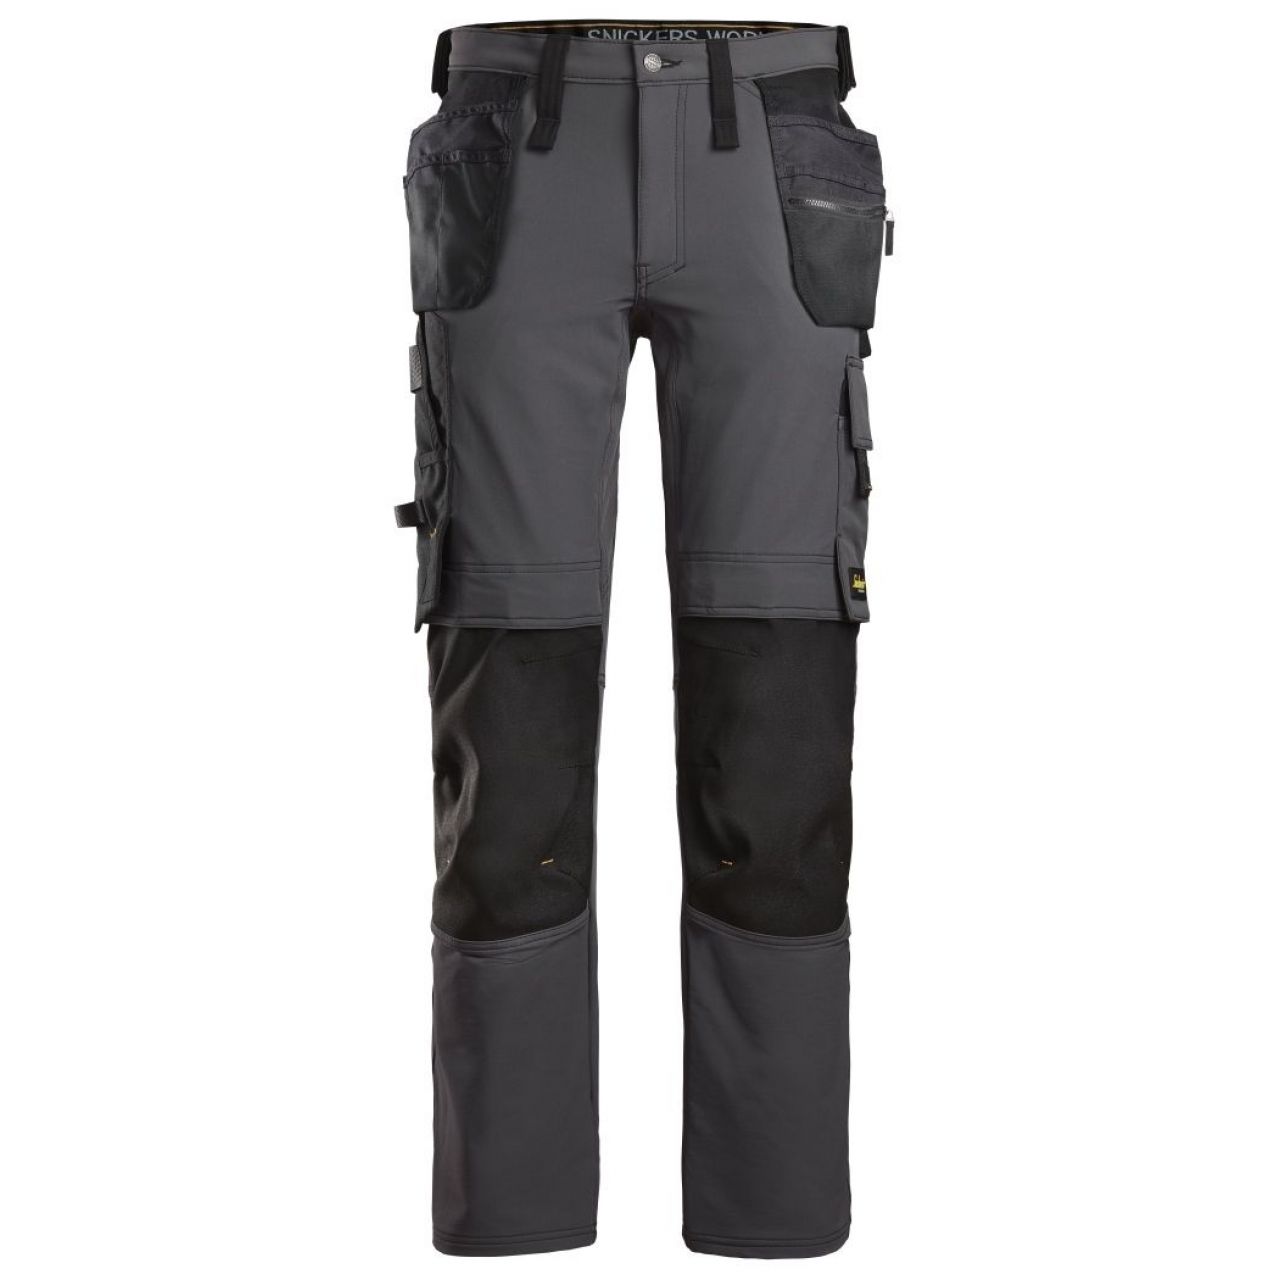 Pantalon elastico AllroundWork bolsillos flotantes gris acero-negro talla 108